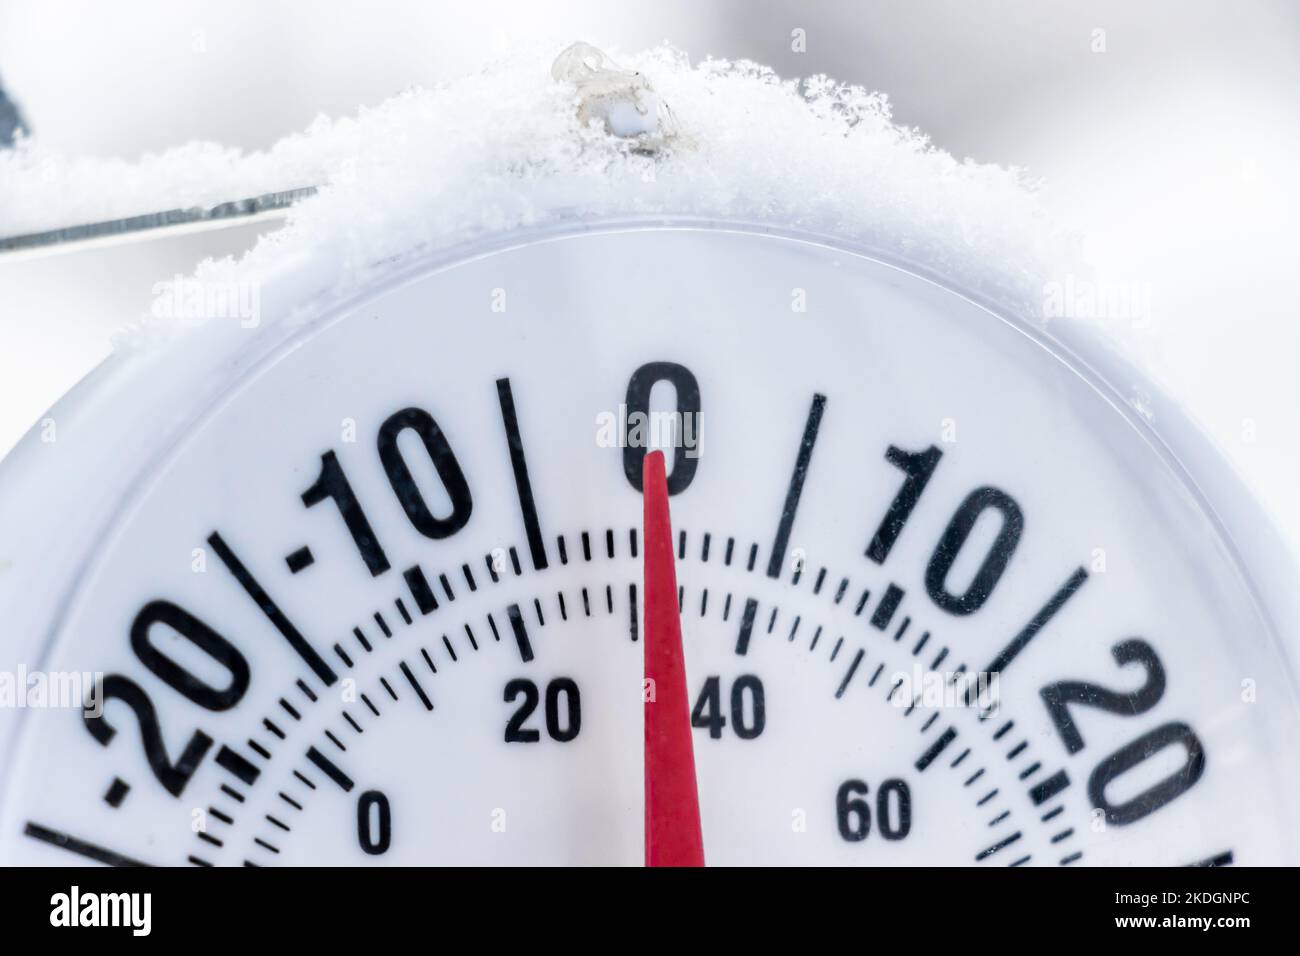 https://c8.alamy.com/comp/2KDGNPC/outside-thermometer-showing-lightly-under-frozen-temperature-zero-celcius-degrees-or-minus-32-farhenheit-winter-snowing-day-2KDGNPC.jpg